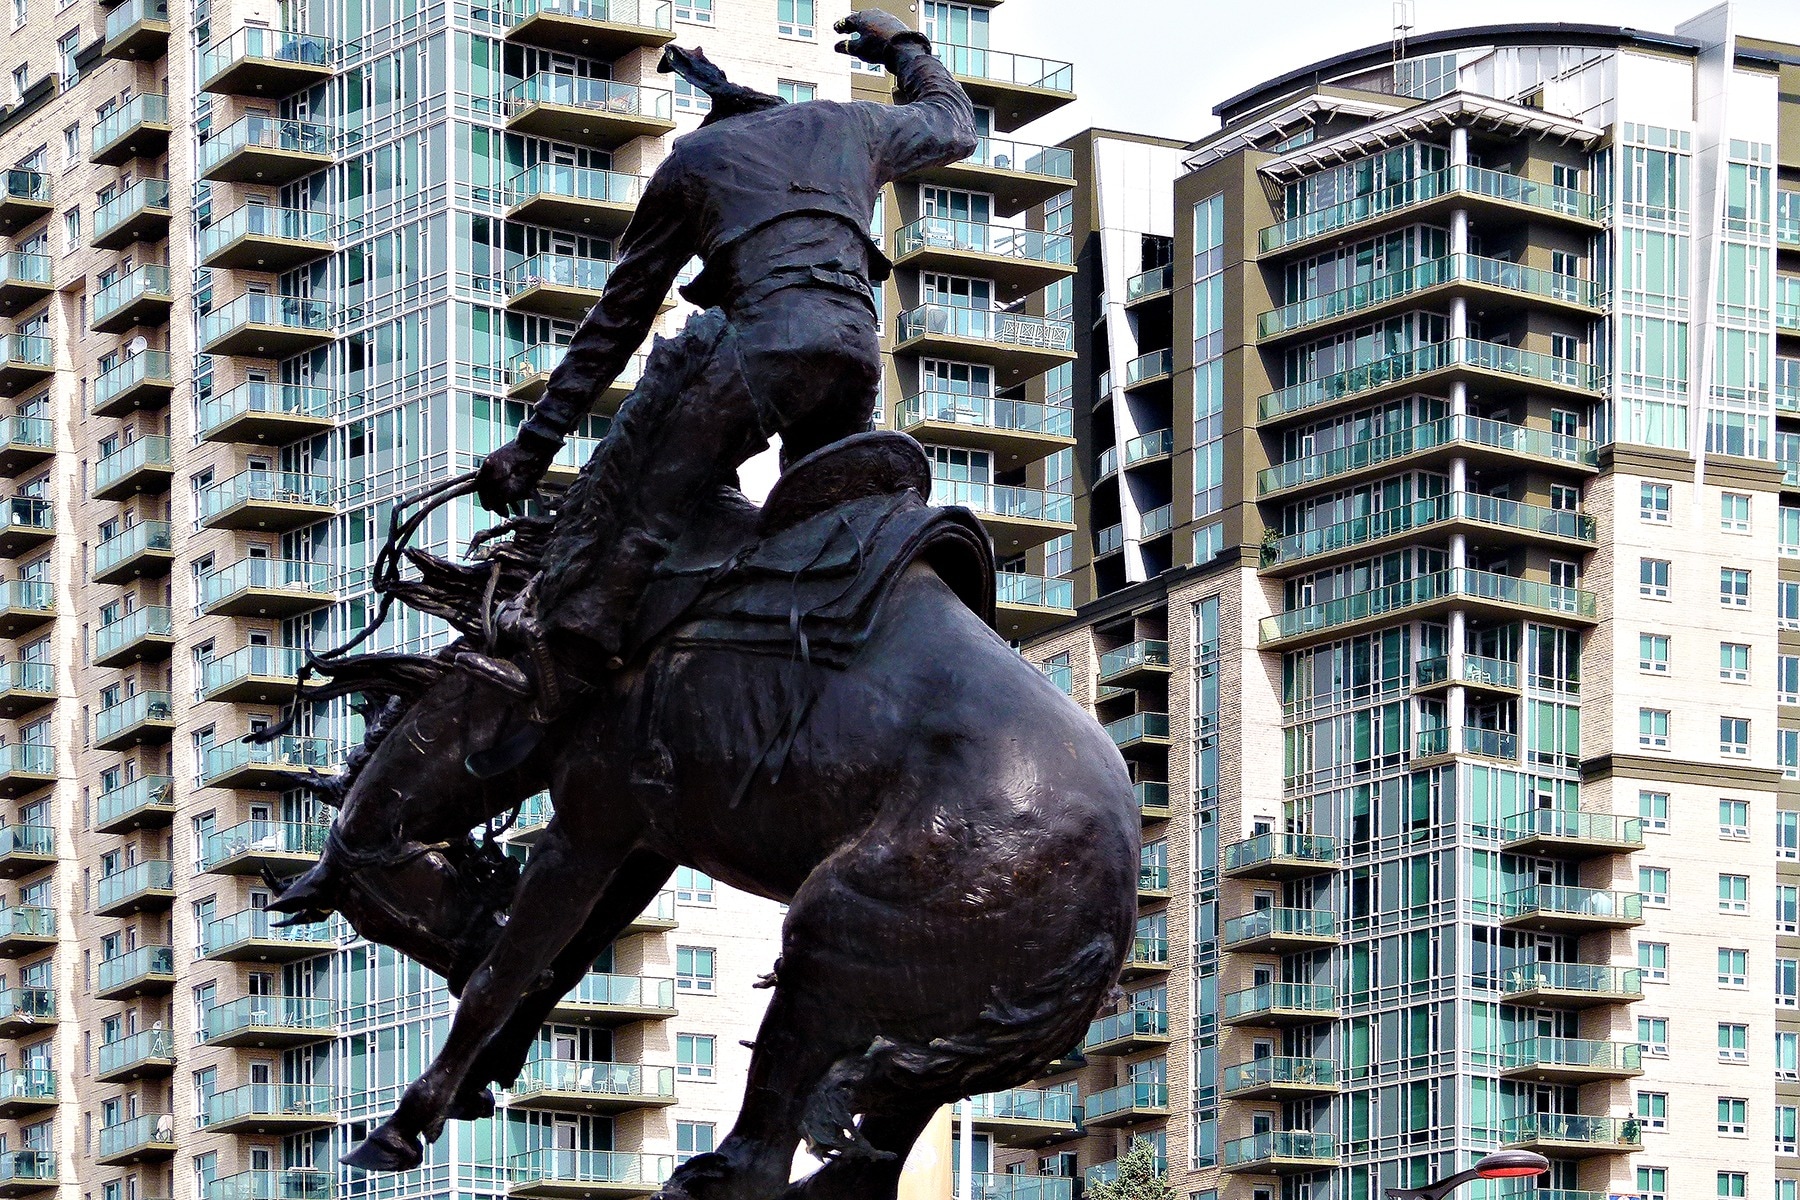 man riding horse black statue